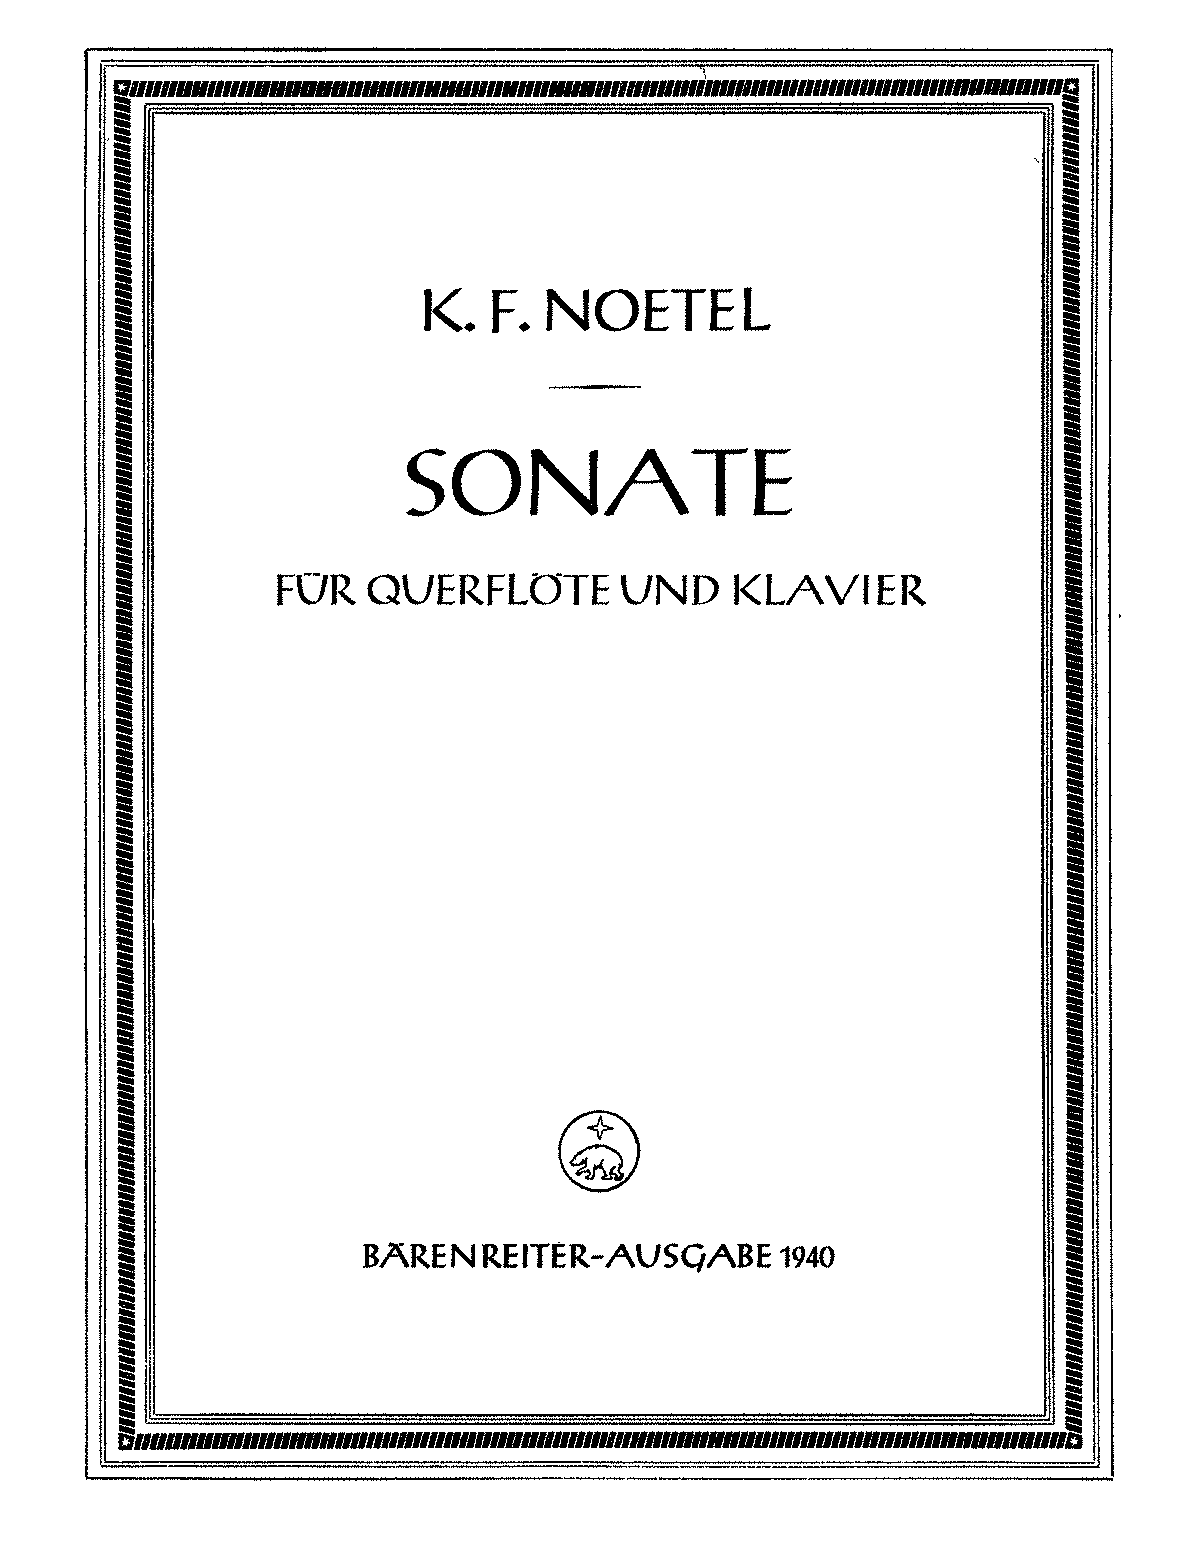 Flute Sonata (Noetel, Konrad Friedrich) - IMSLP